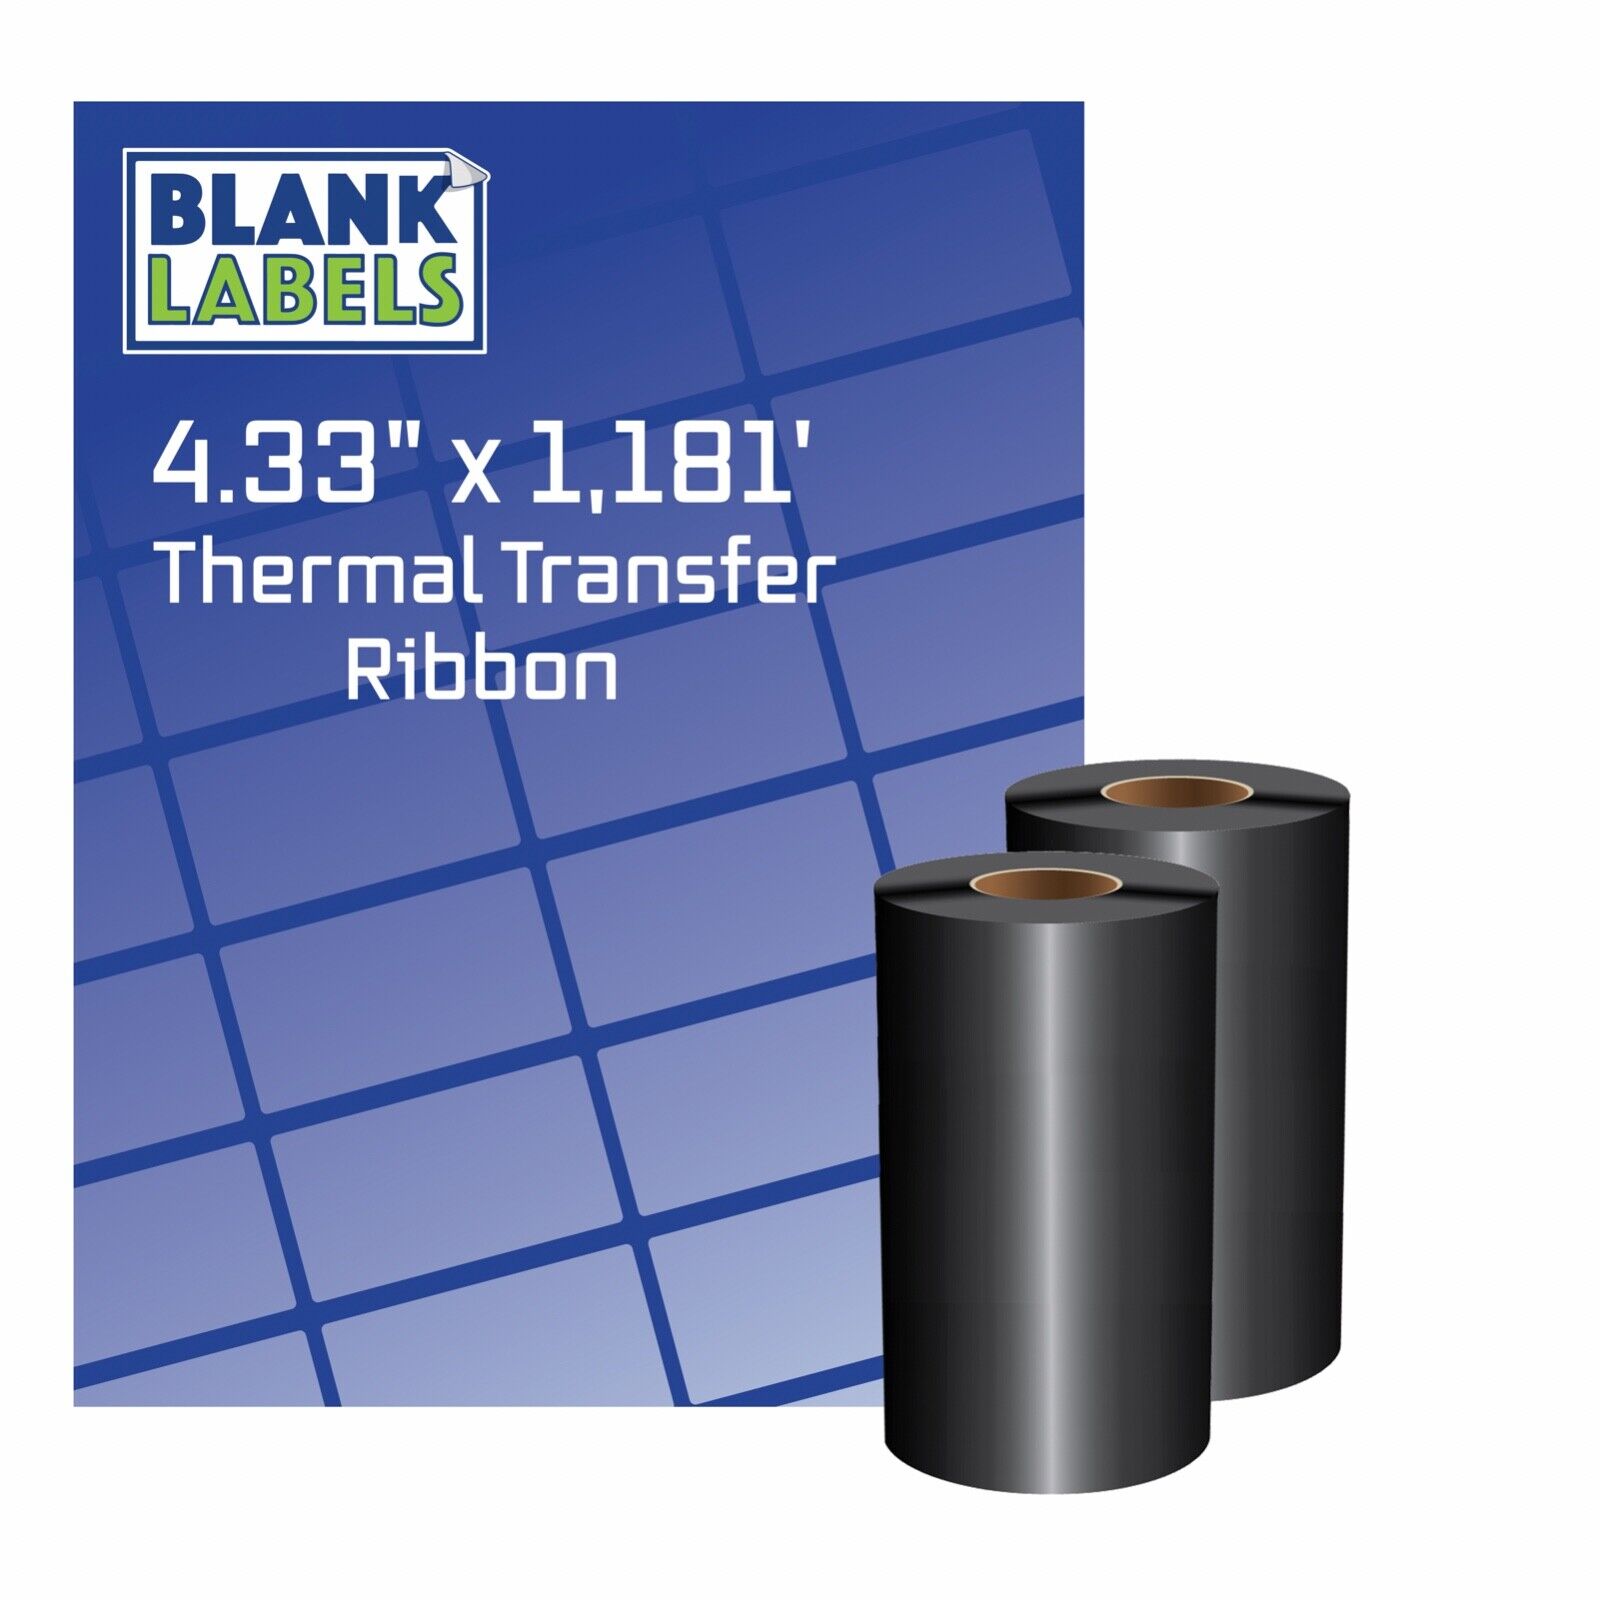 4.33 x 1181 Thermal Transfer Ribbon 110x360 Wax 24 roll compatible Sato Datamax